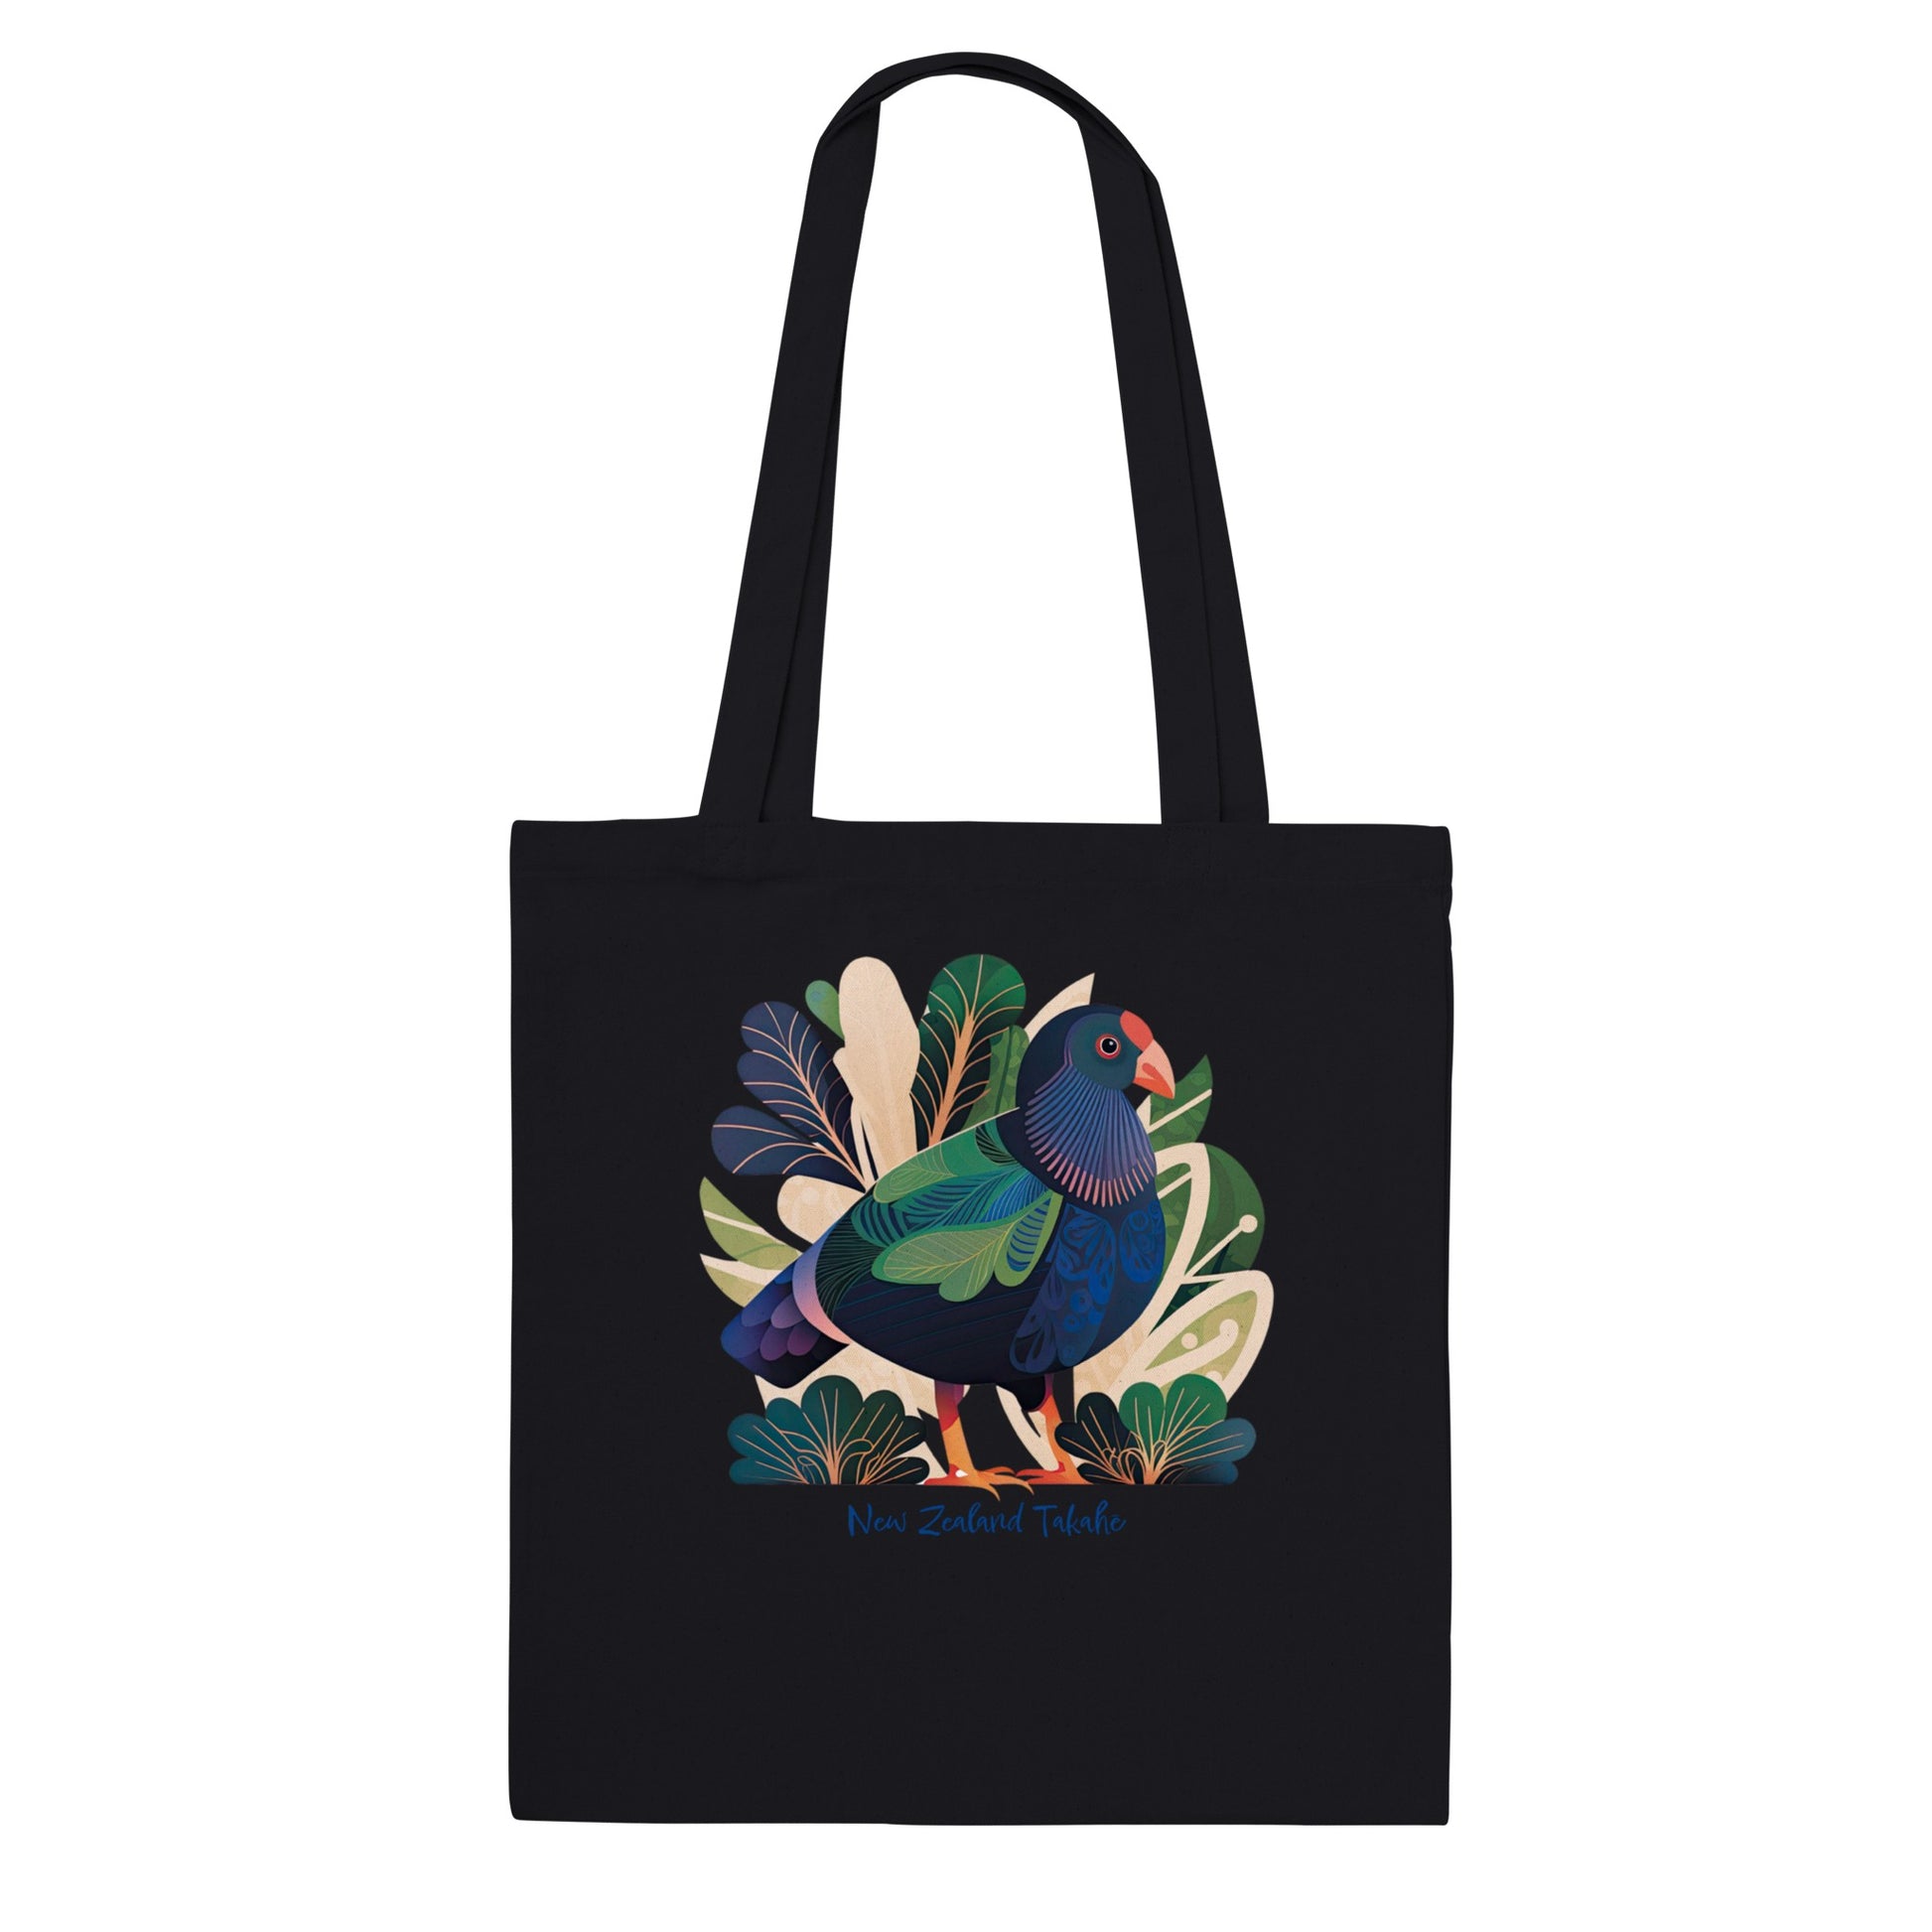 Black tote bag with a New Zealand Takahe bird print